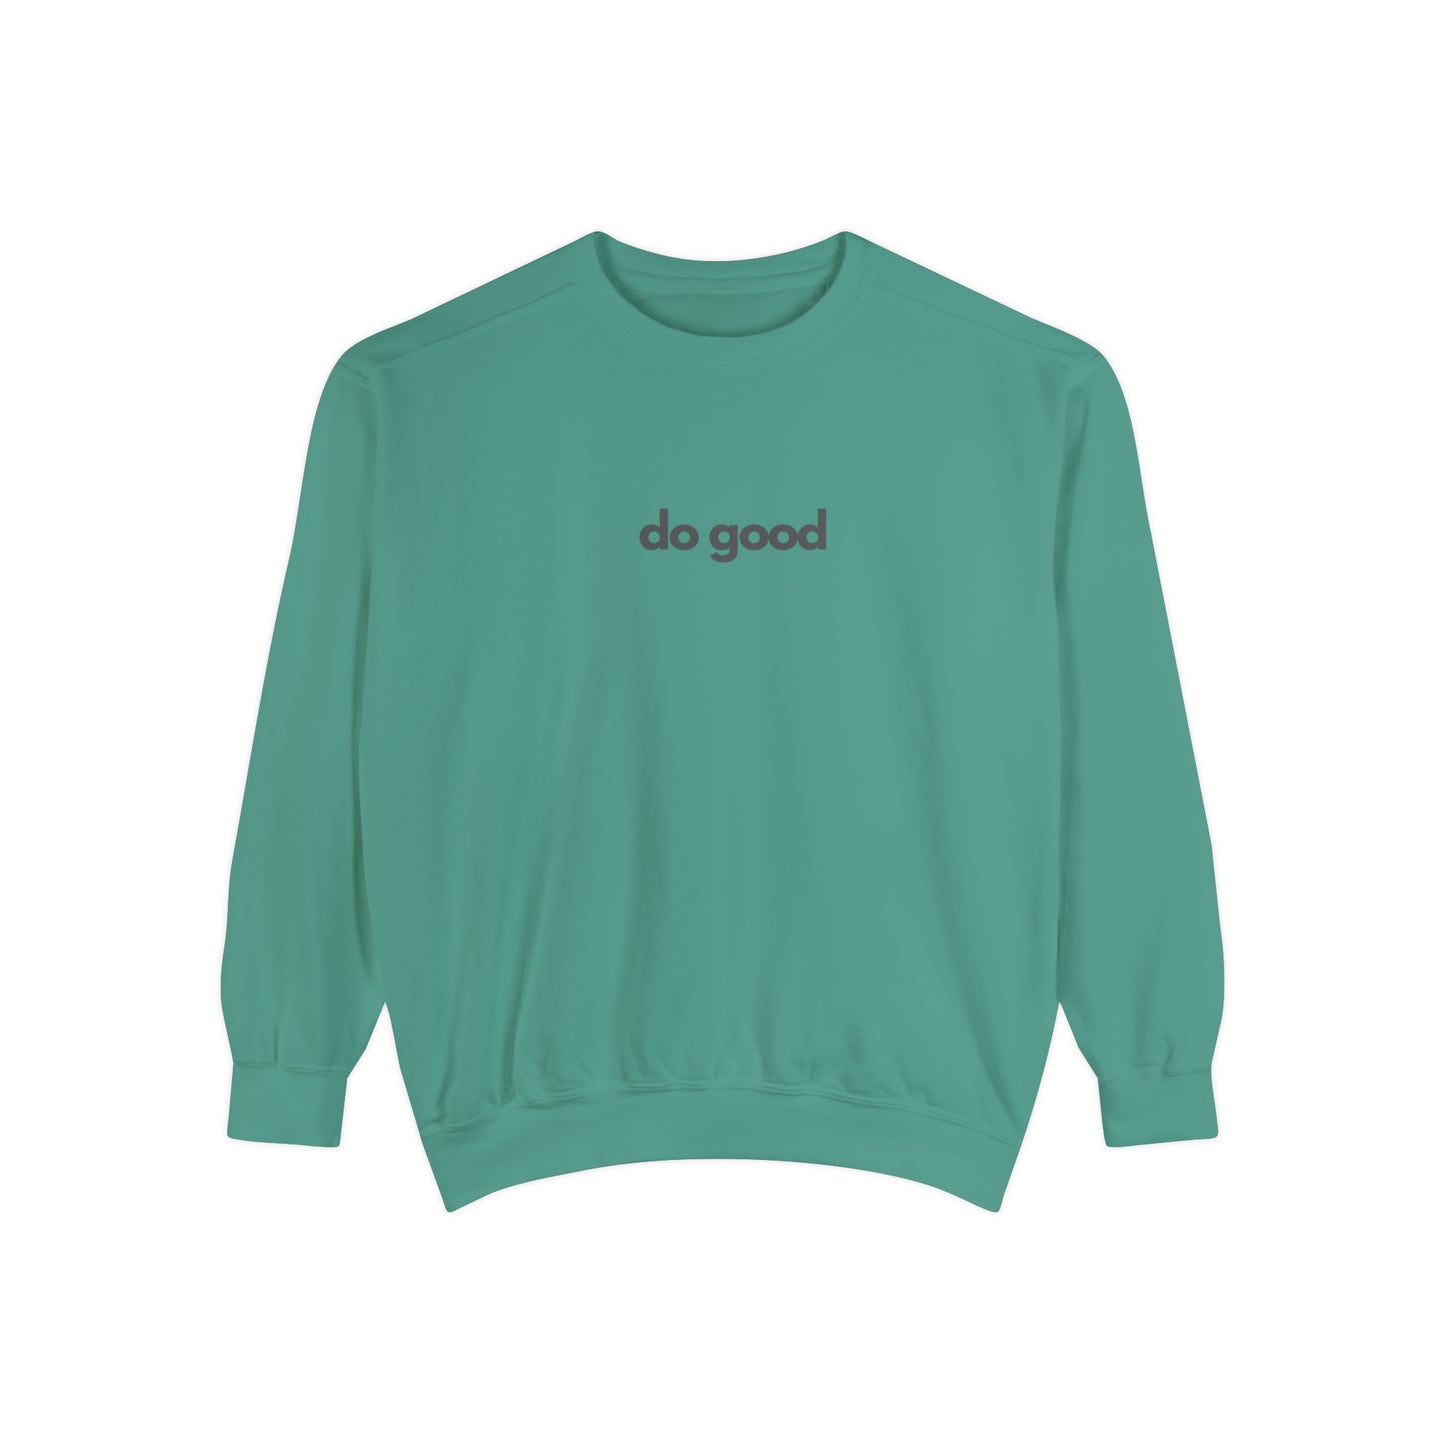 Women's 'do good' Garment-Dyed Sweatshirt